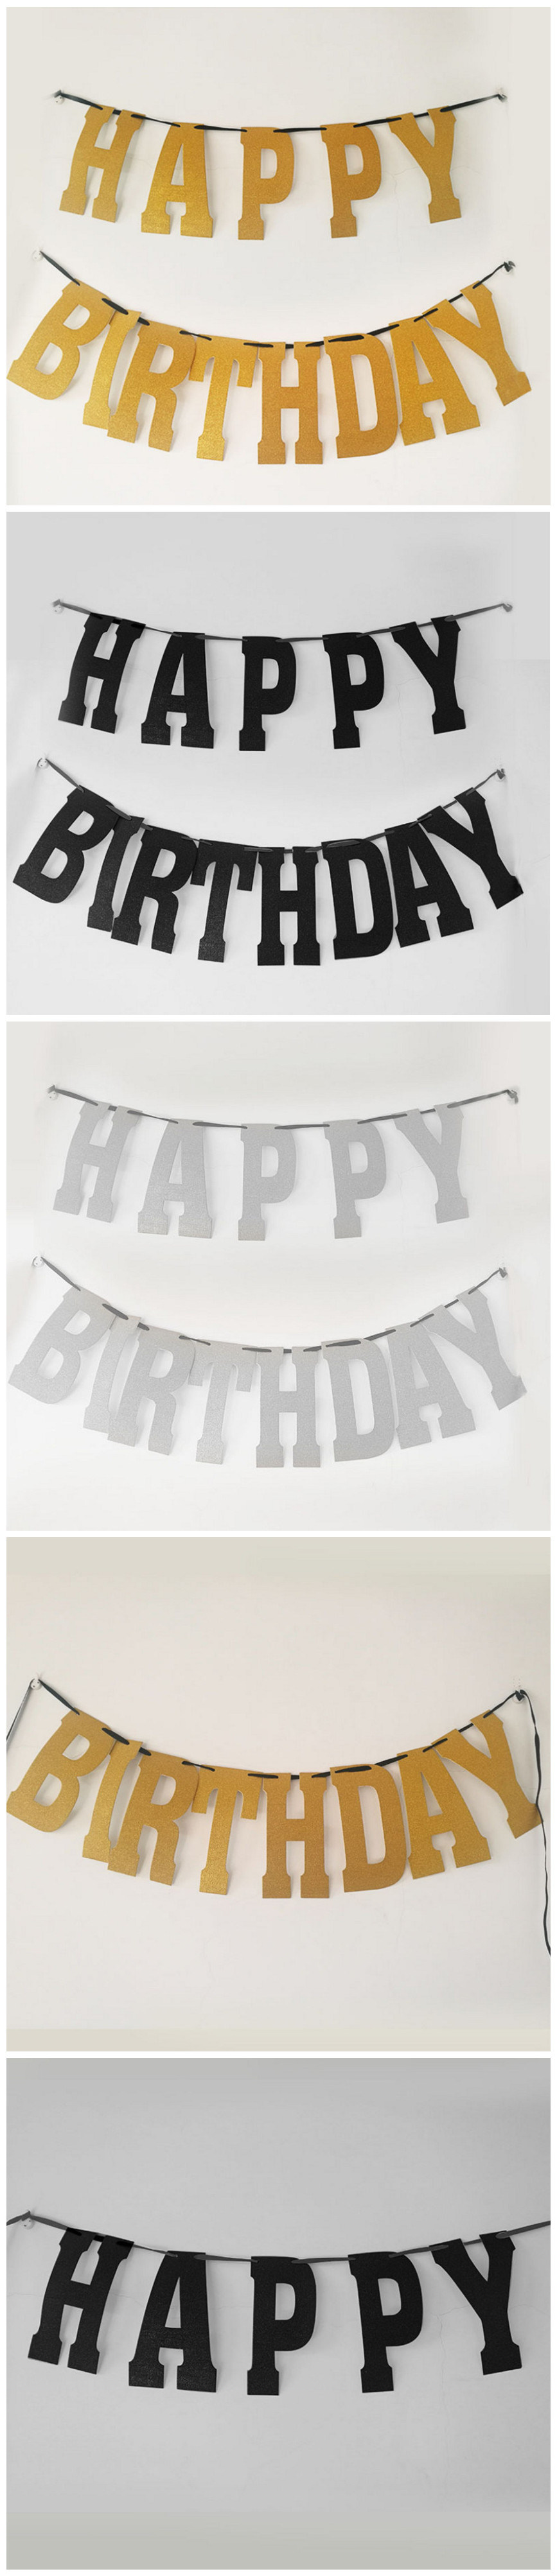 Custom Carton Happy Birthday Paper Banner for Kid Birthday Party